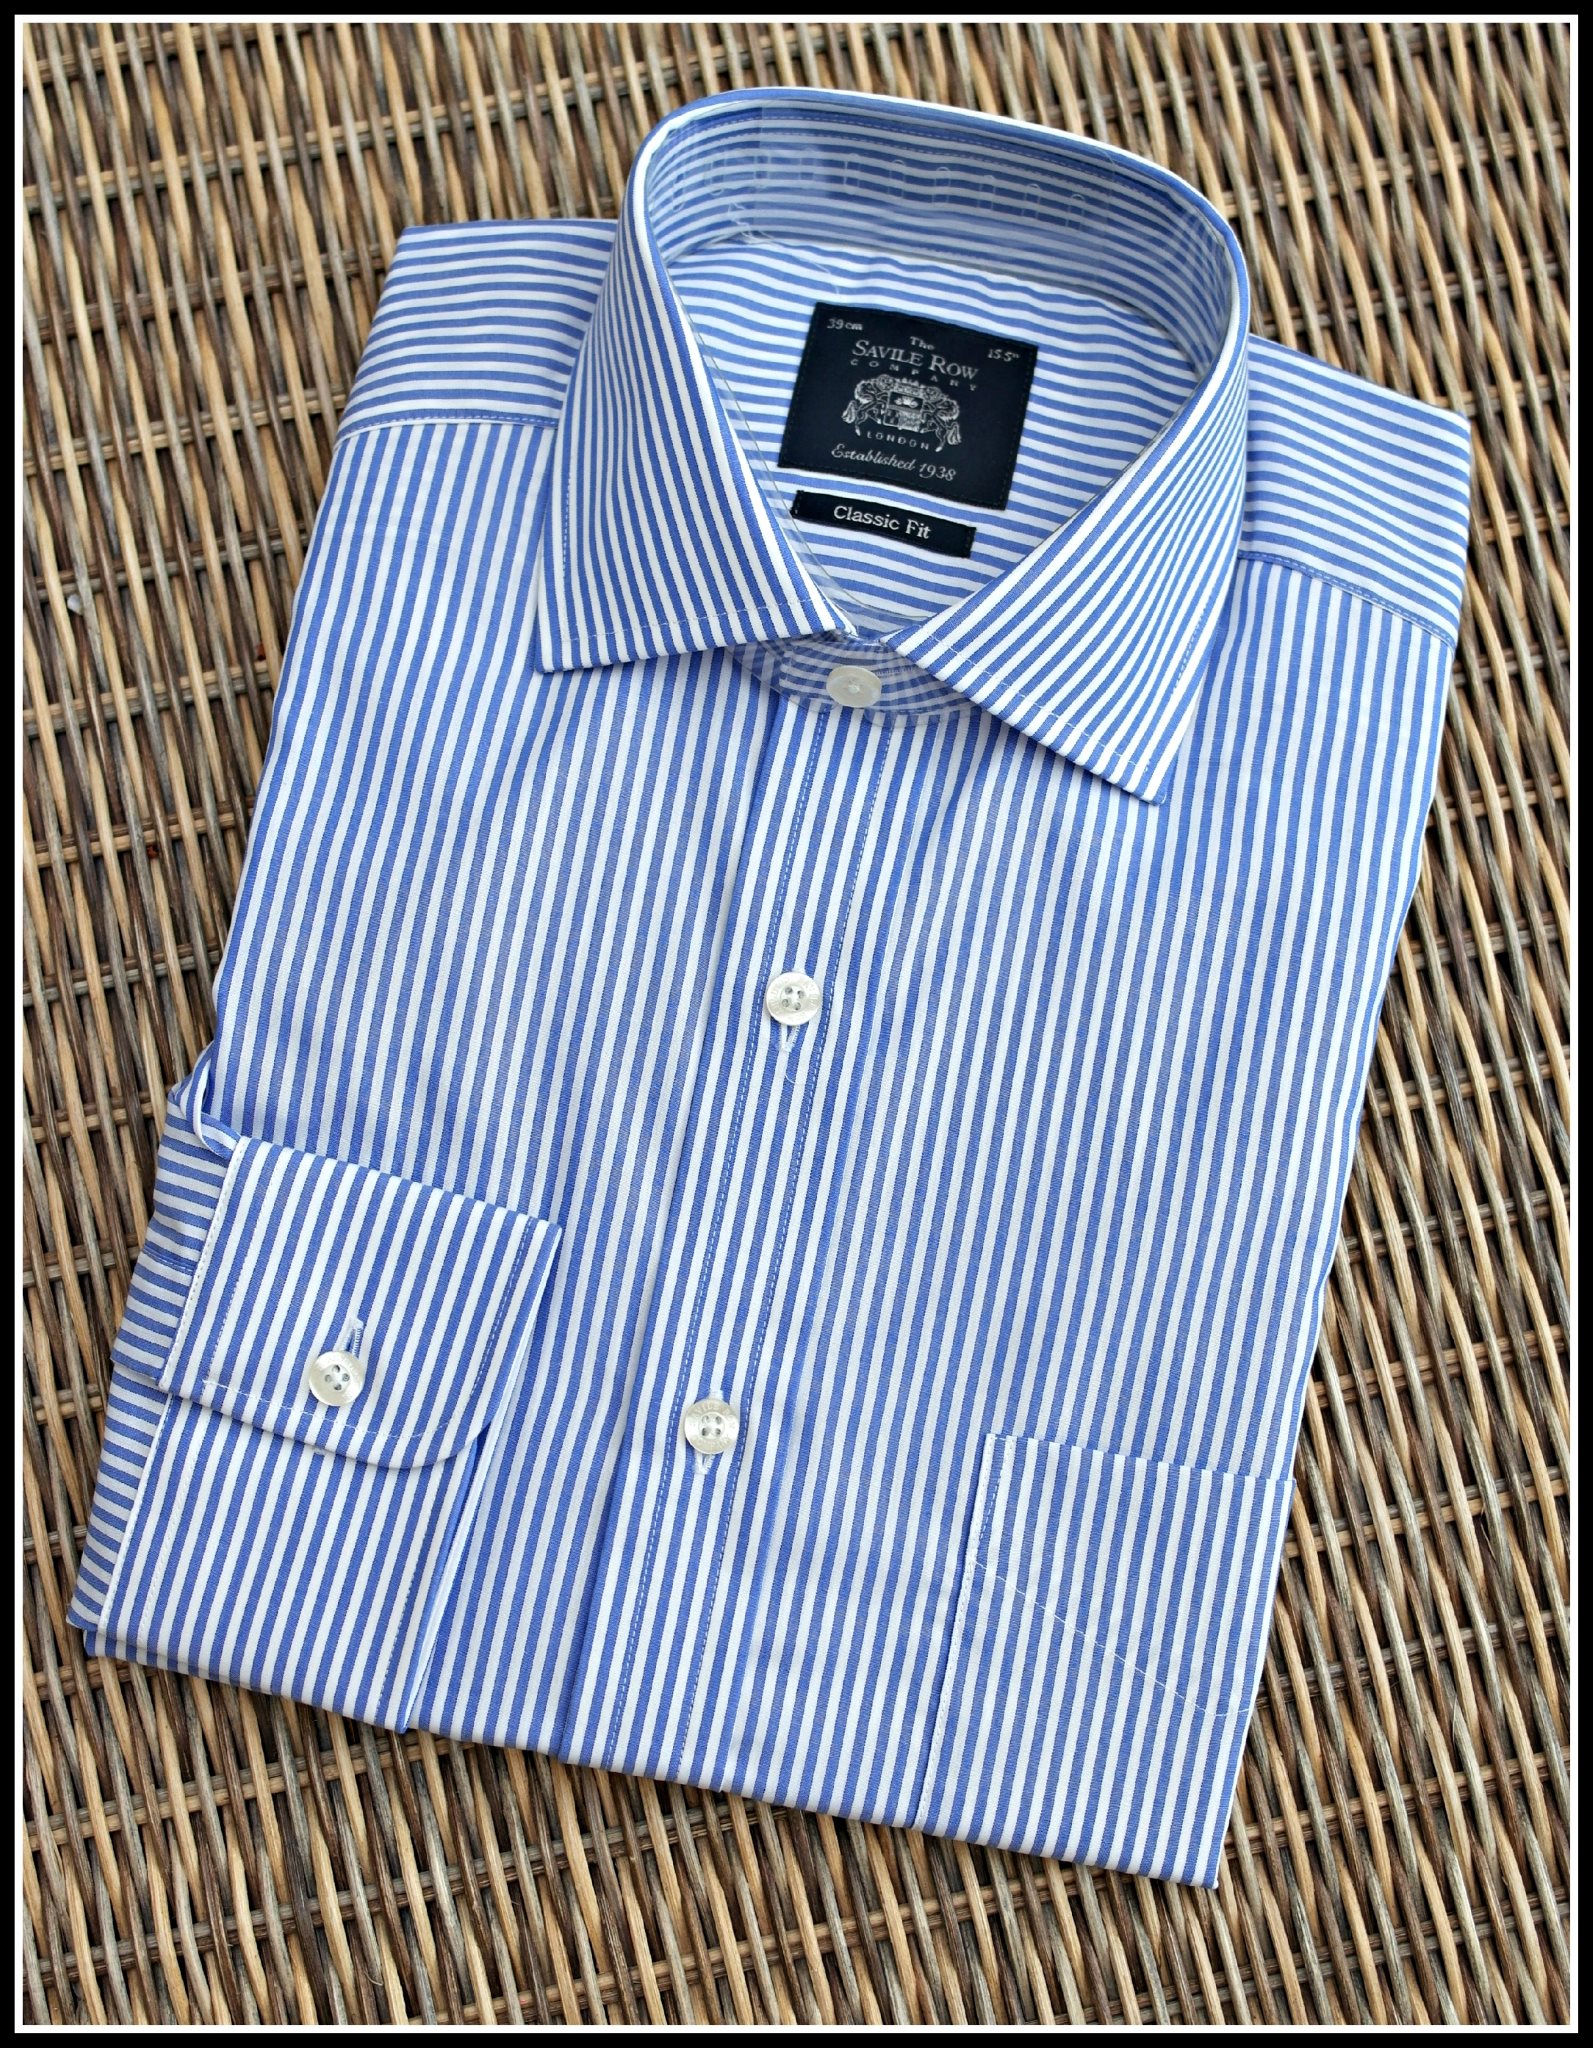 Men's shirts from Savile Row Company - Dad Blog UK